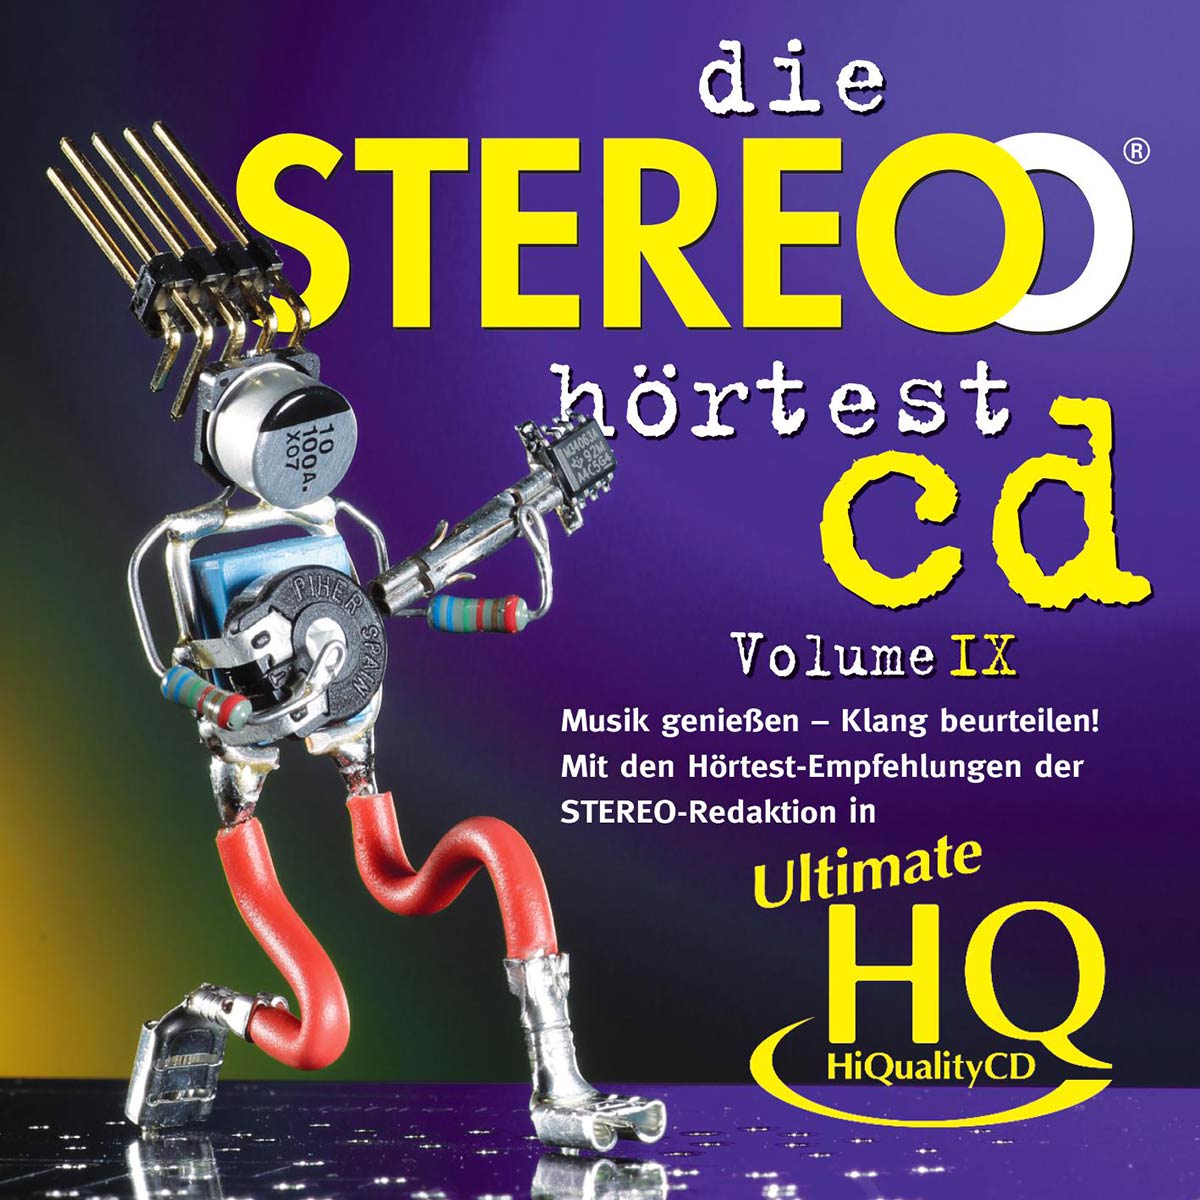 Die Stereo Hörtest CD, Vol. IX